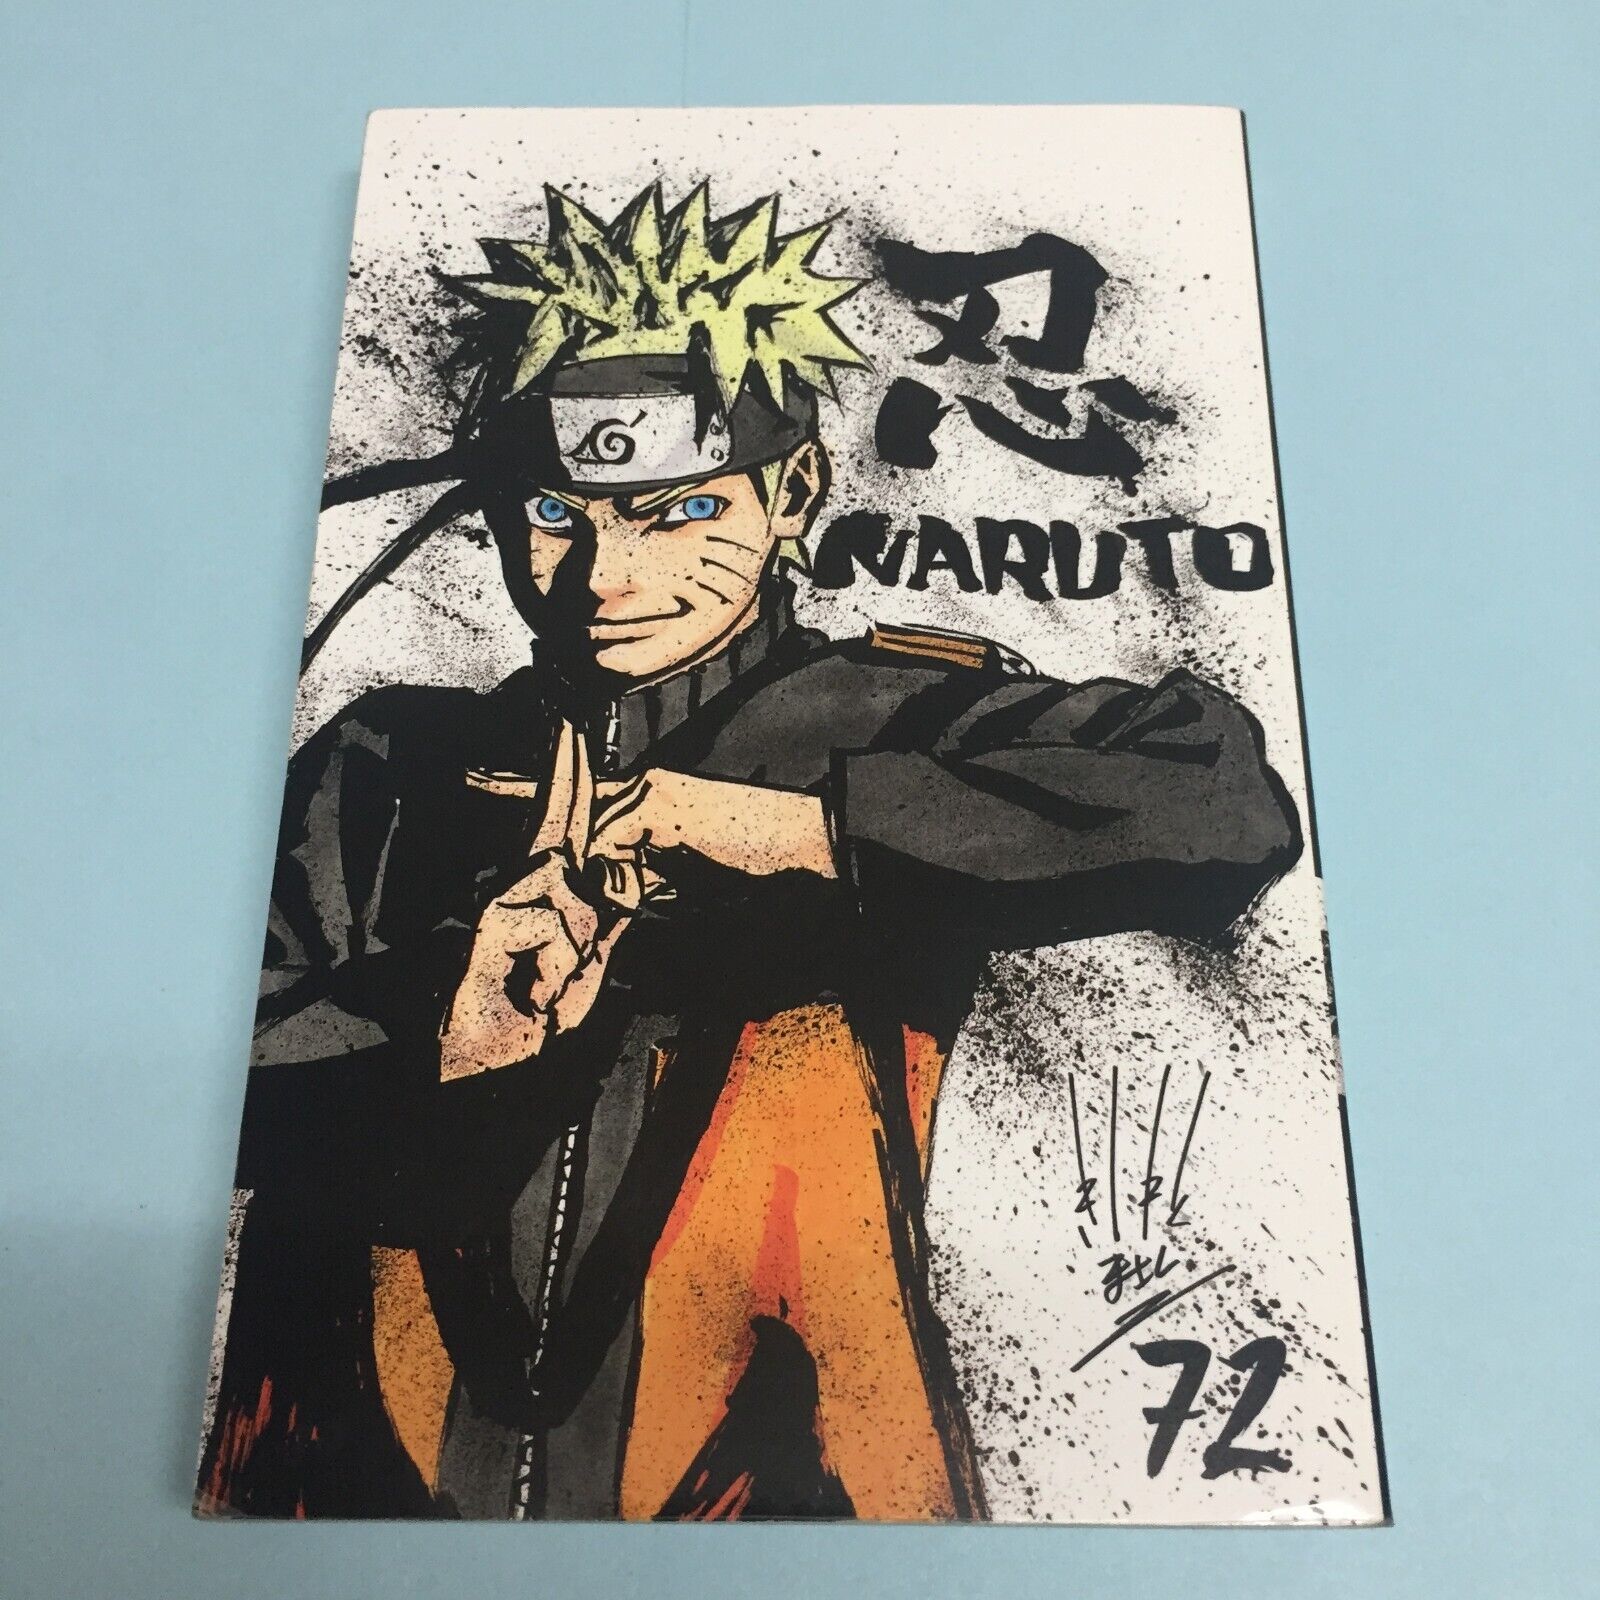 Naruto Volume 72 NYCC 2015 Exclusive Cover Variant Edition Manga English